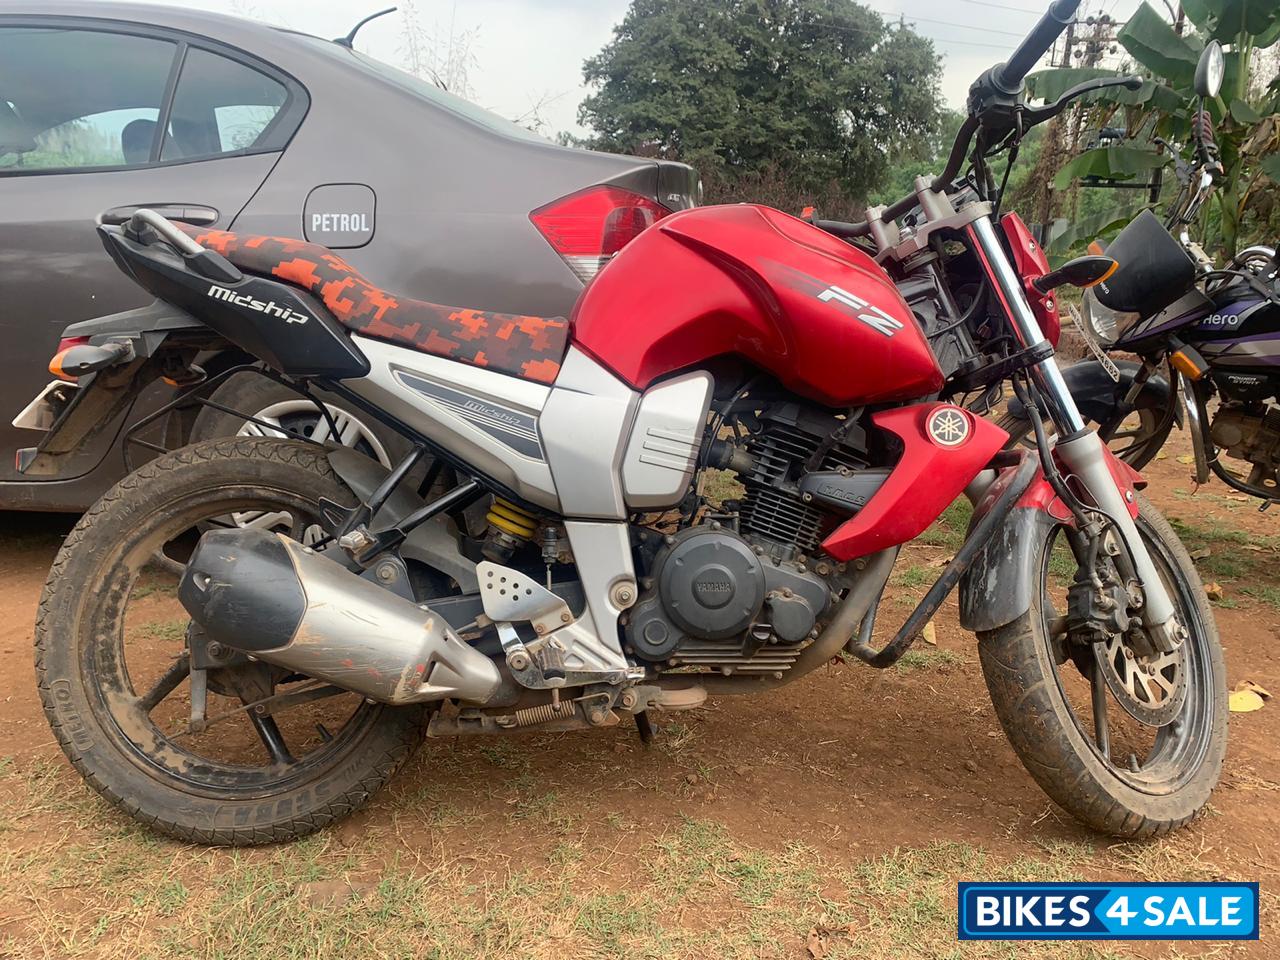 Used Yamaha FZ16 for sale in Kolhapur. ID 311009 - Bikes4Sale